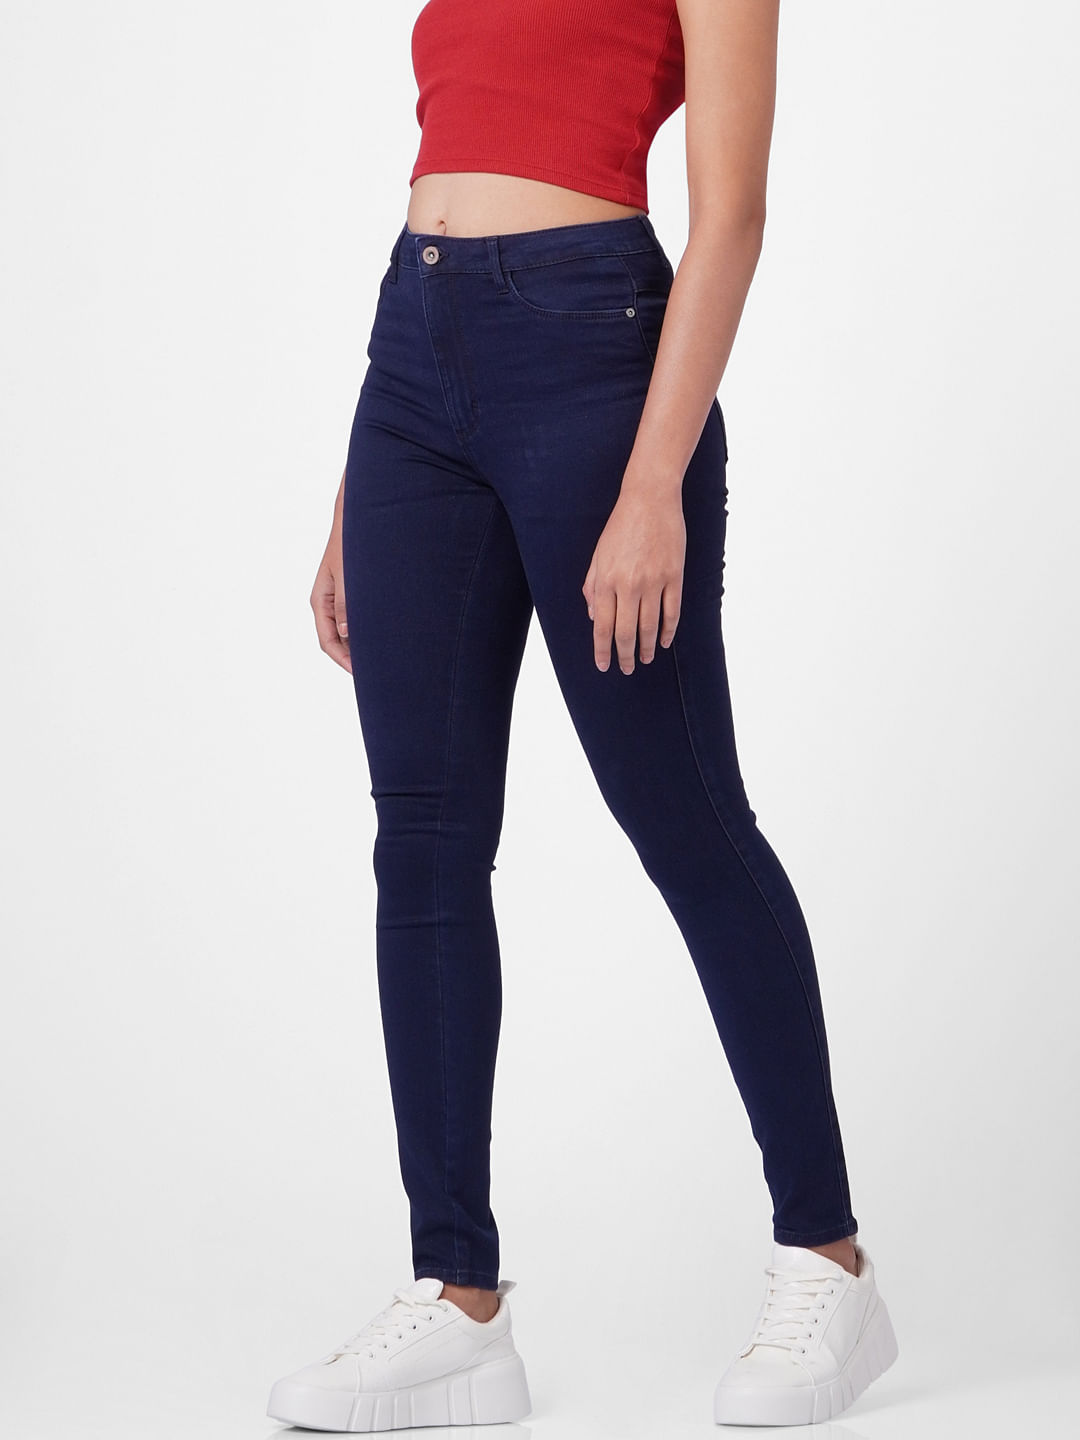 Chalodiya Slim Fit Women Black Trousers - Buy Chalodiya Slim Fit Women  Black Trousers Online at Best Prices in India | Flipkart.com